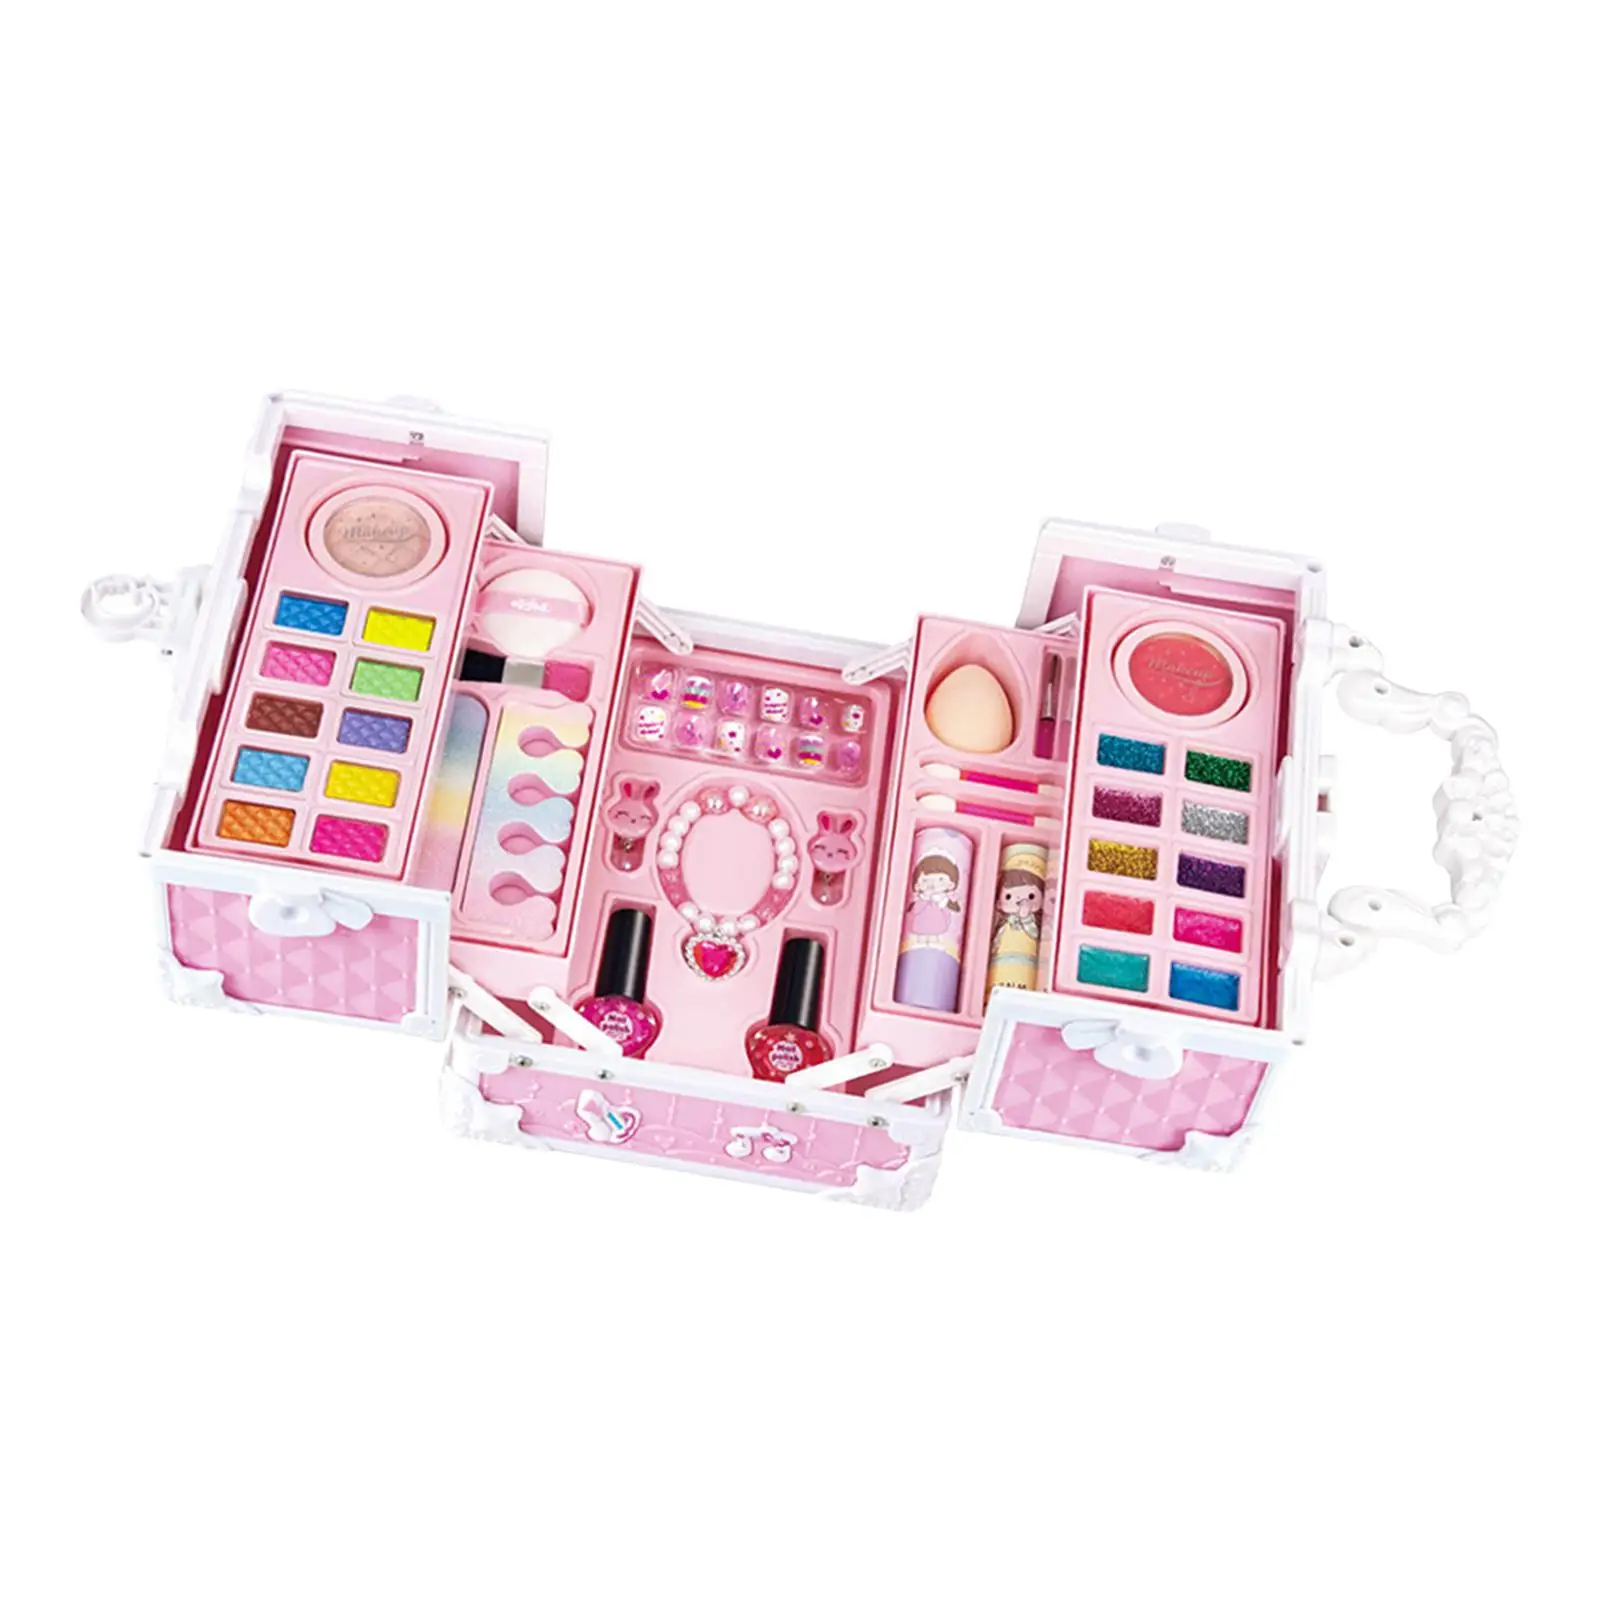 Pretend Play Makeup Beauty Set Pretend Makeup Accessories Kids Makeup Kits Makeup Set Toy for Girls Kids Children Present Gift